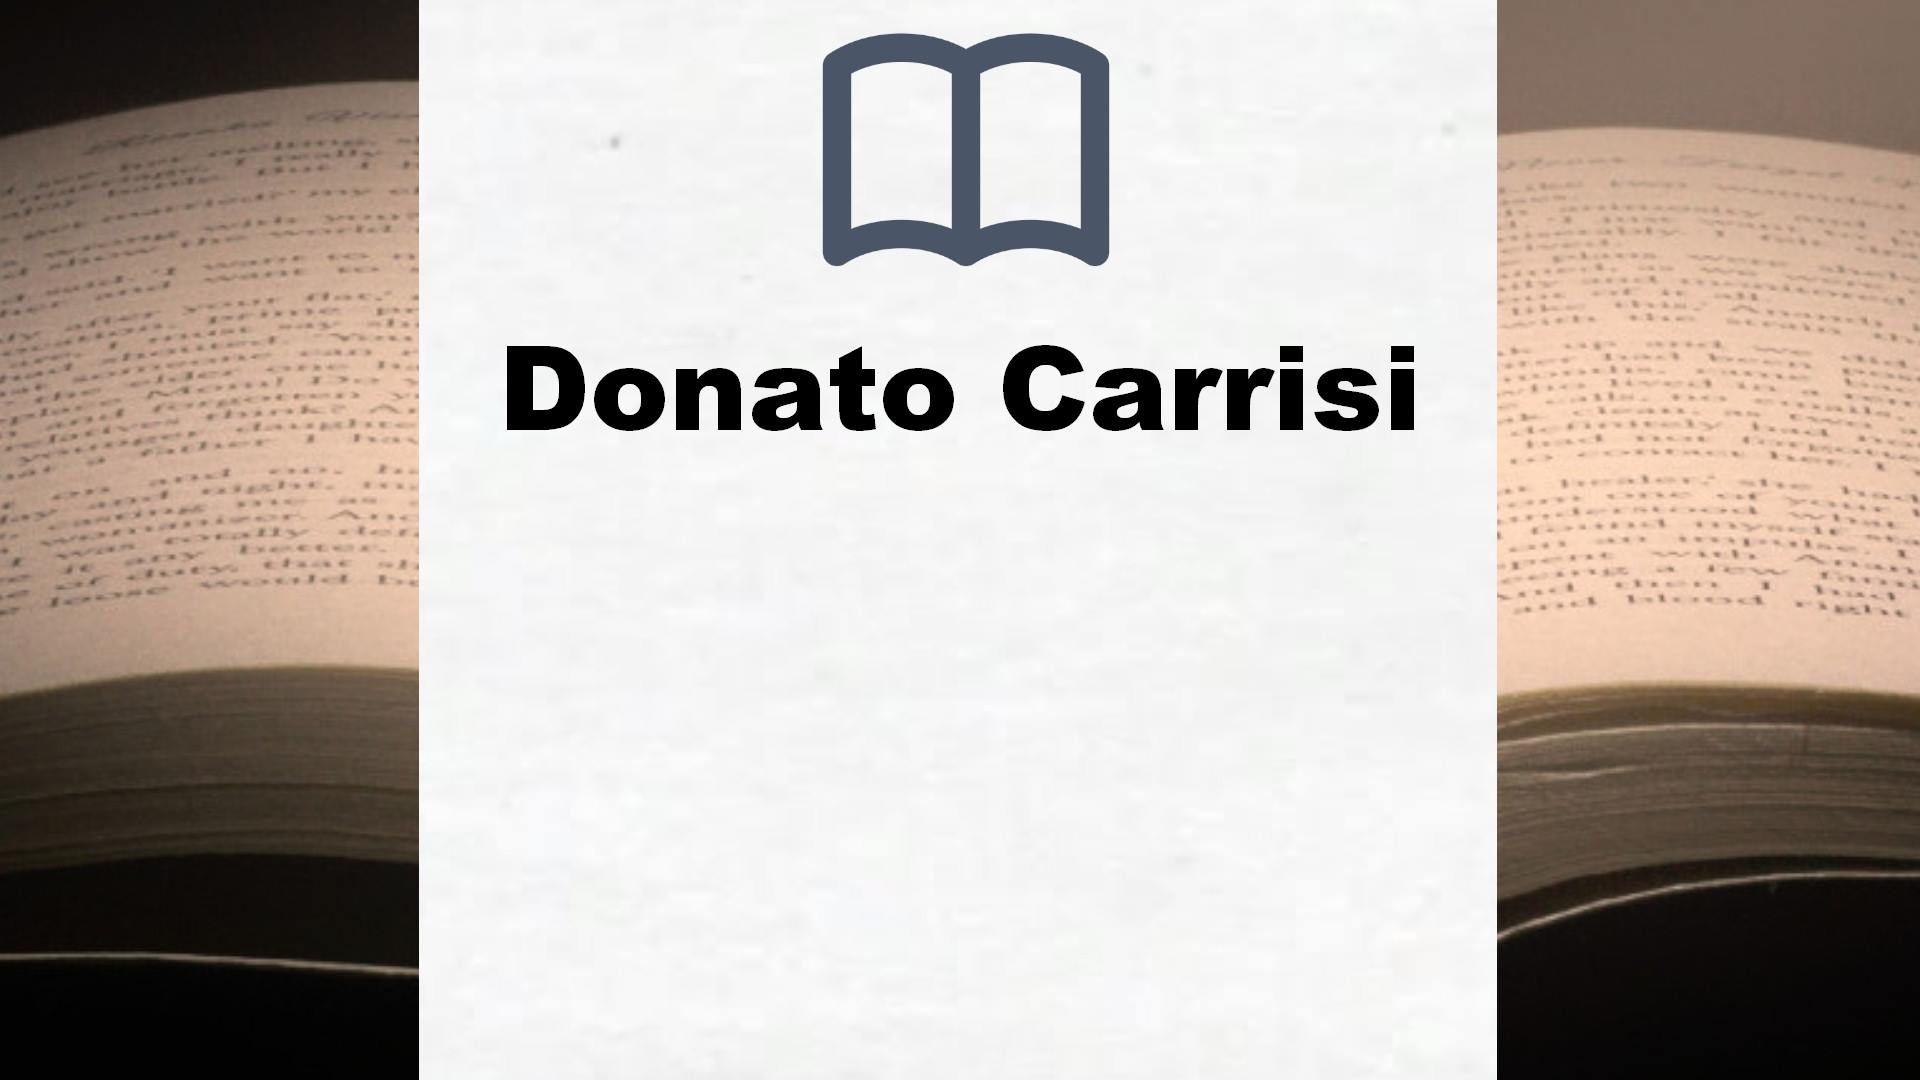 Libros Donato Carrisi